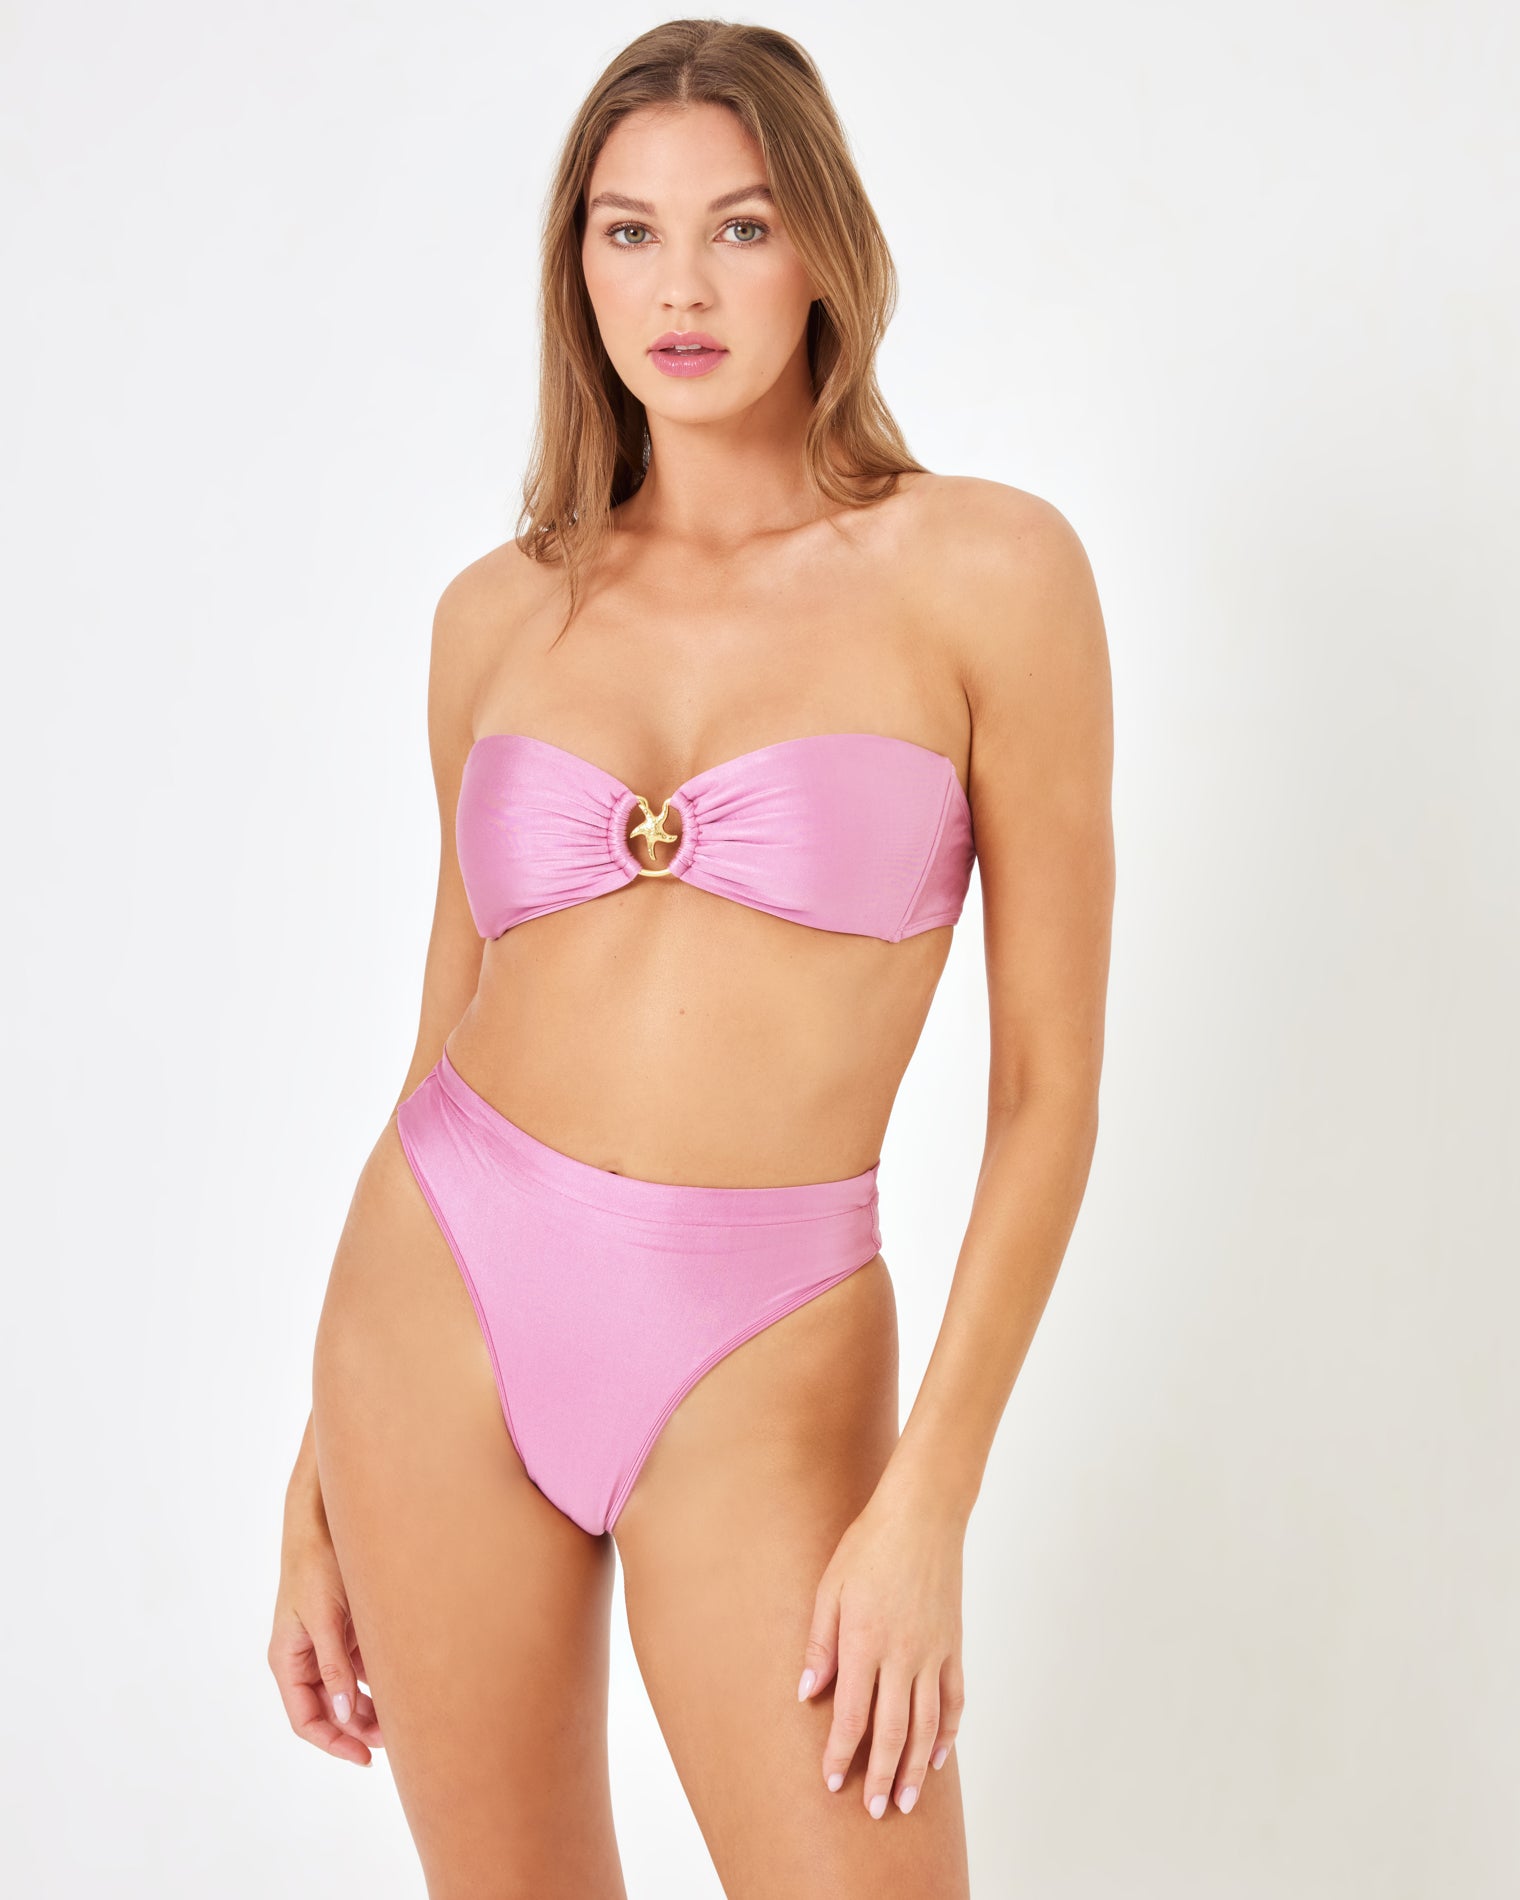 LSPACE X Anthropologie Frenchi Bikini Bottom - Pink Lady Pink Lady | Model: Daria (size: S)